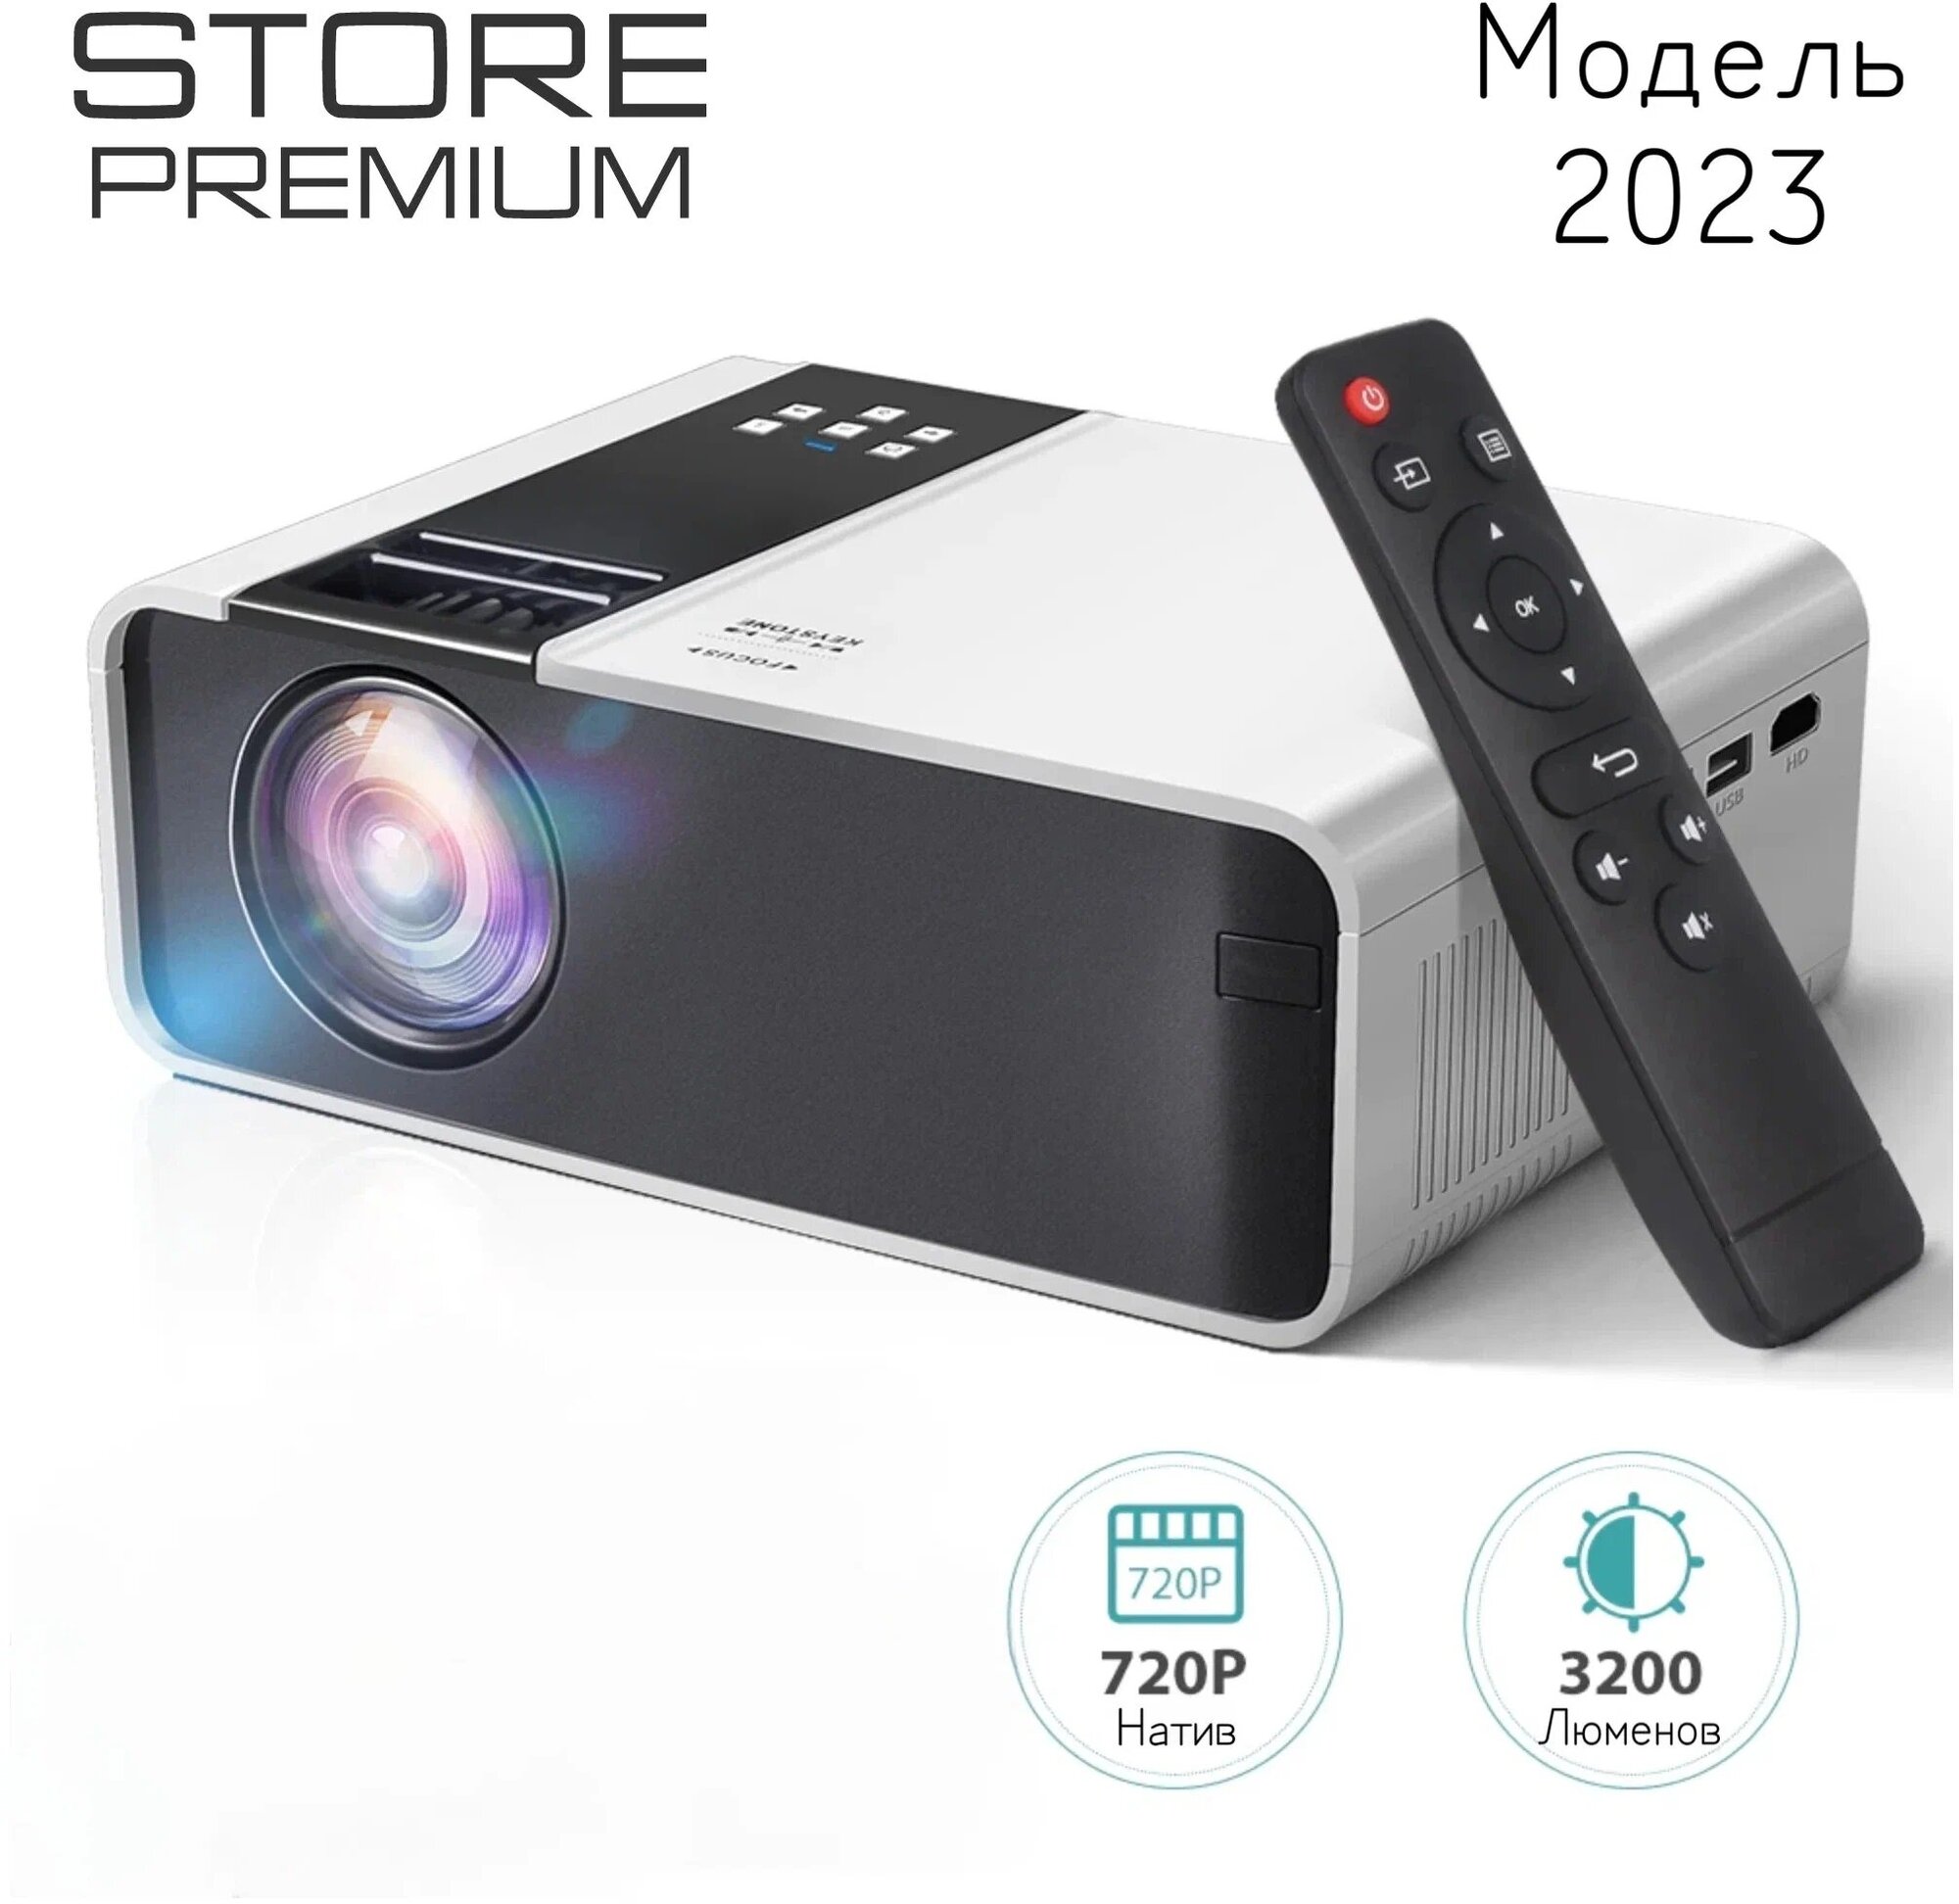 Проектор Store Premium v90 (Wi Fi + Подключение к Телефону) / / Видео проектор 4 К Full HD для дома